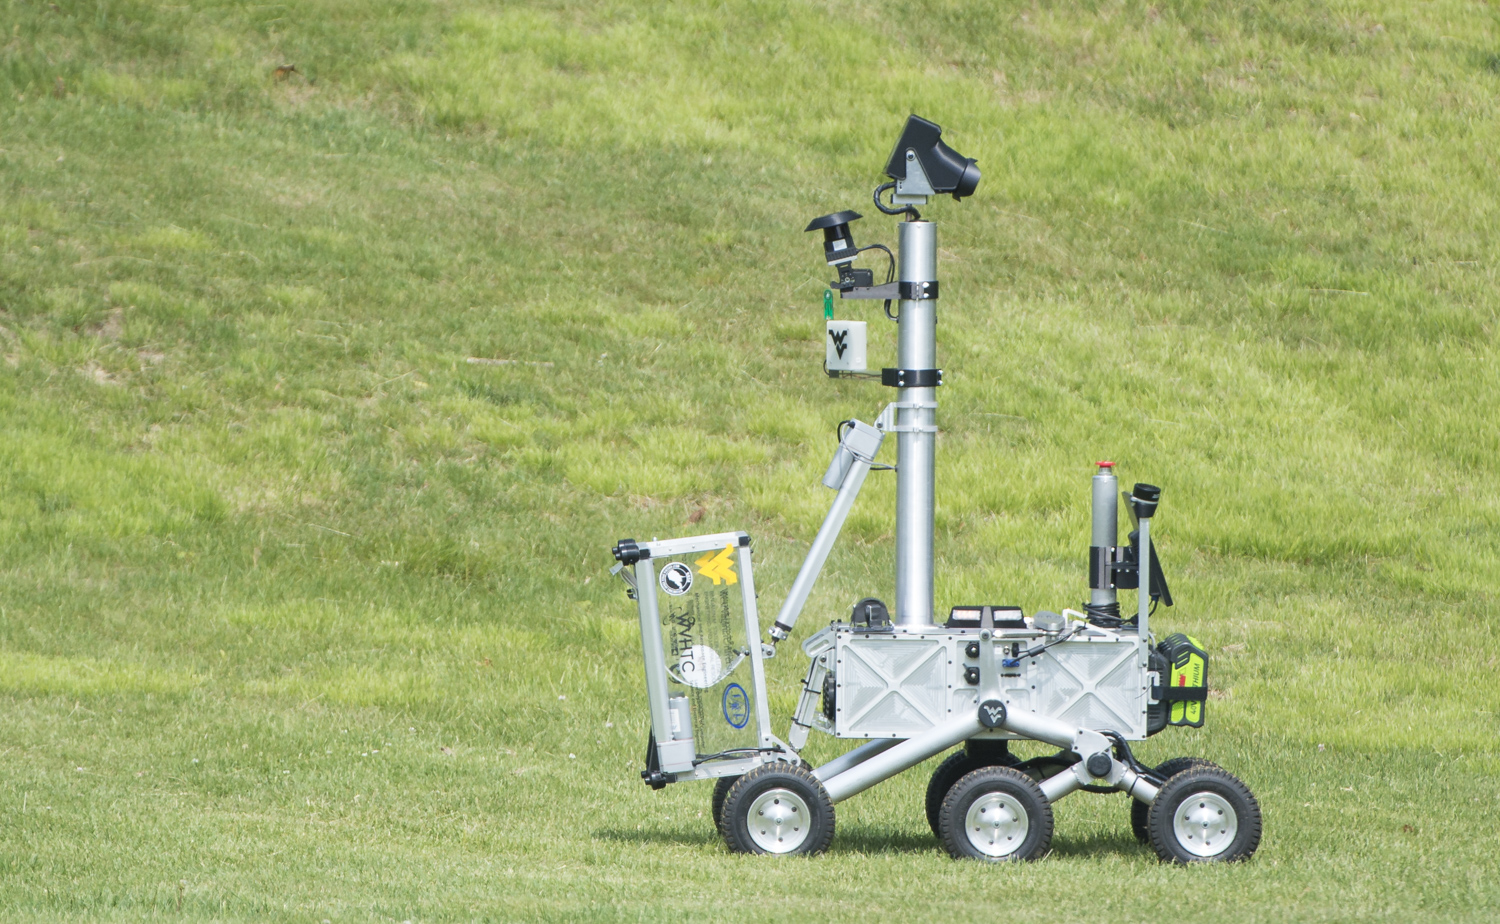 Team from West Virginia University wins NASA’s Sample Return Robot Challenge